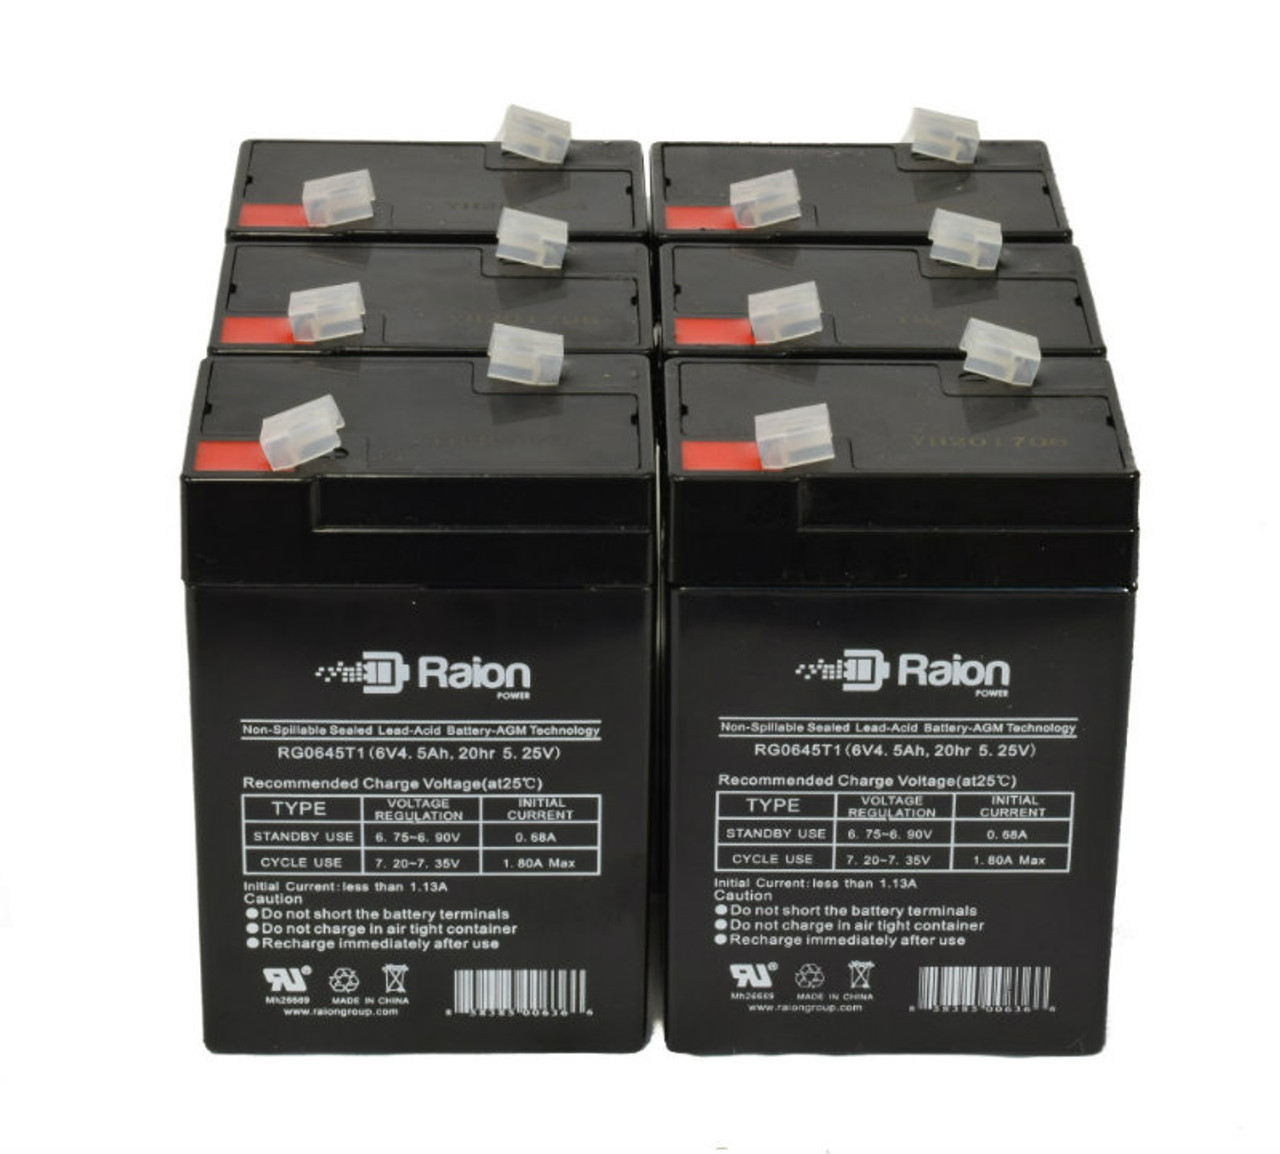 Raion Power 6V 4.5Ah Replacement Emergency Light Battery for Tork 640 - 6 Pack